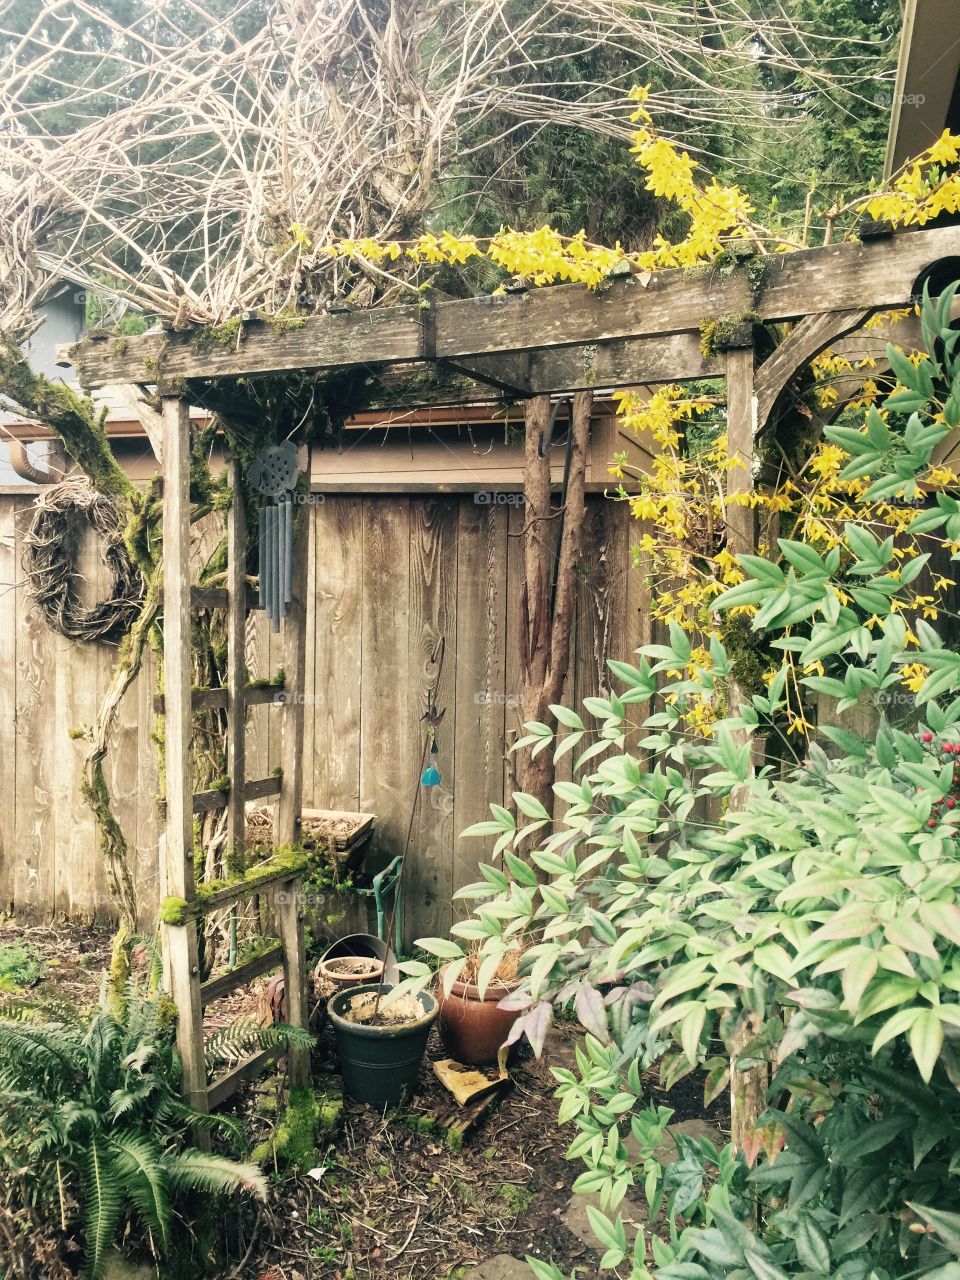 Gateway to my Grandma's Garden
Vancouver, Washington
27 March 2017